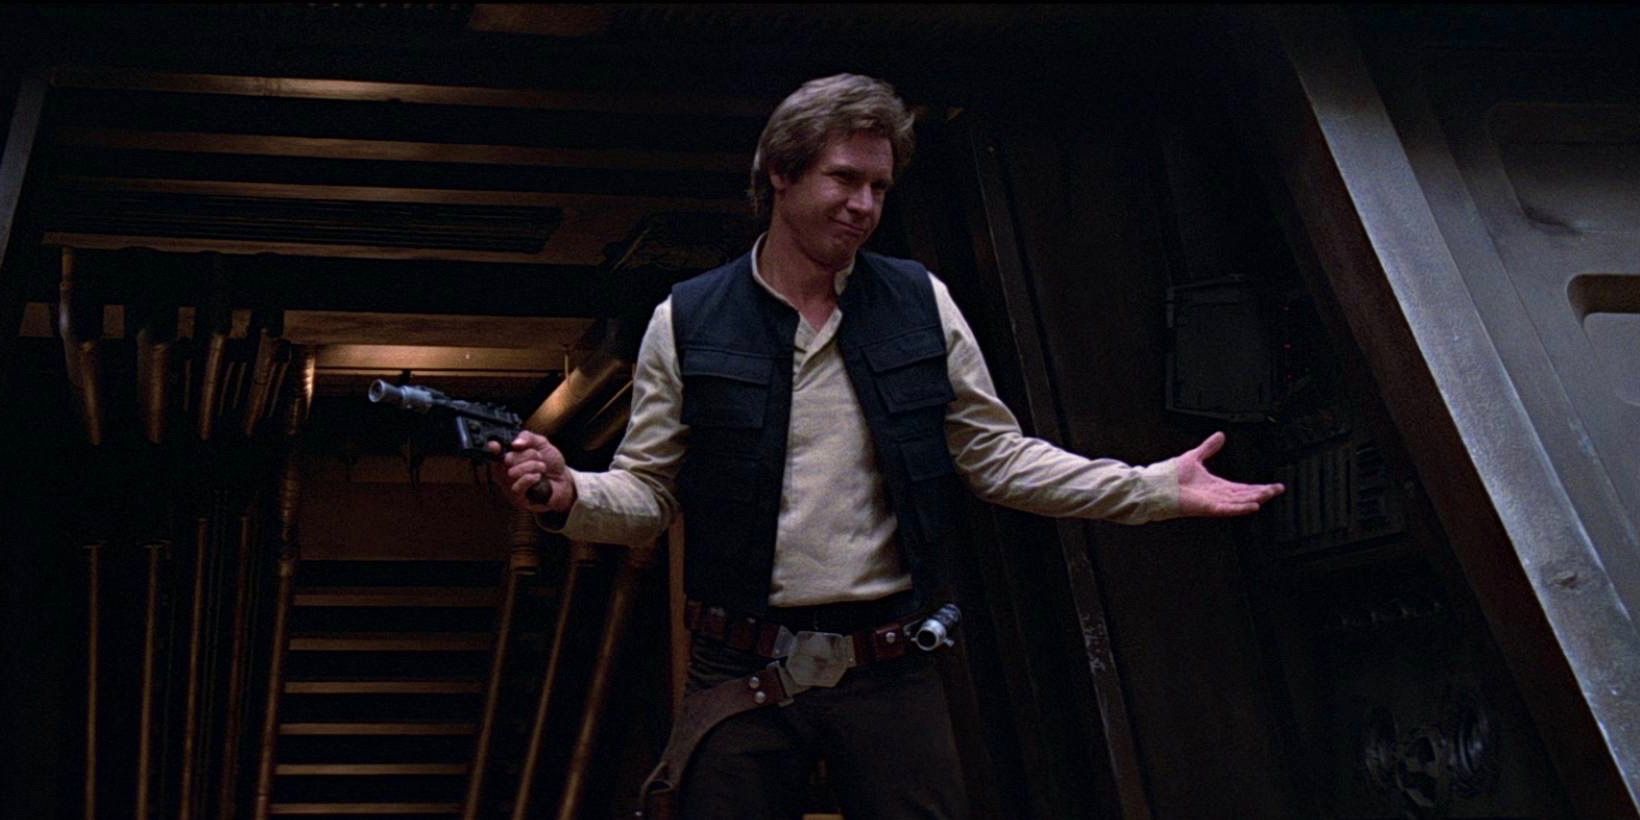 Harrison Ford as Han Solo outside the shield generator in Star Wars Episode VI Return of the Jedi